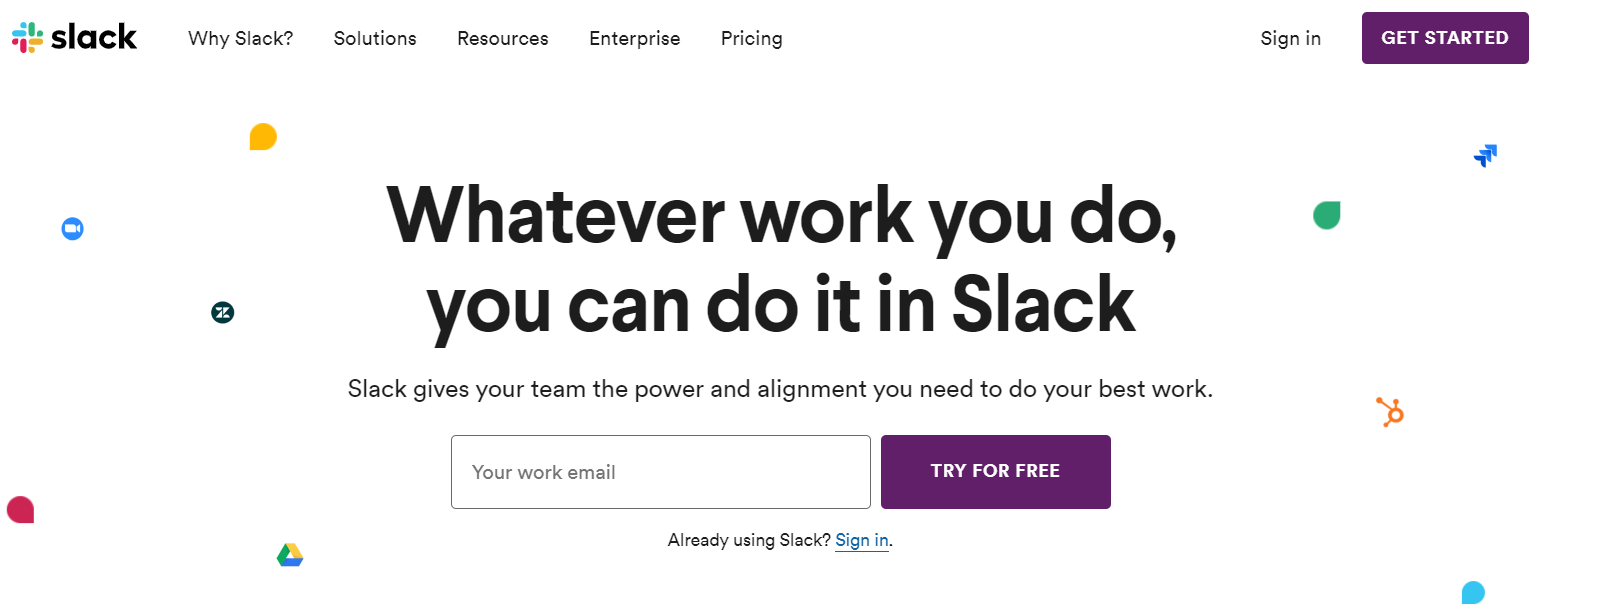 Slack网站在桌面上的行动呼吁